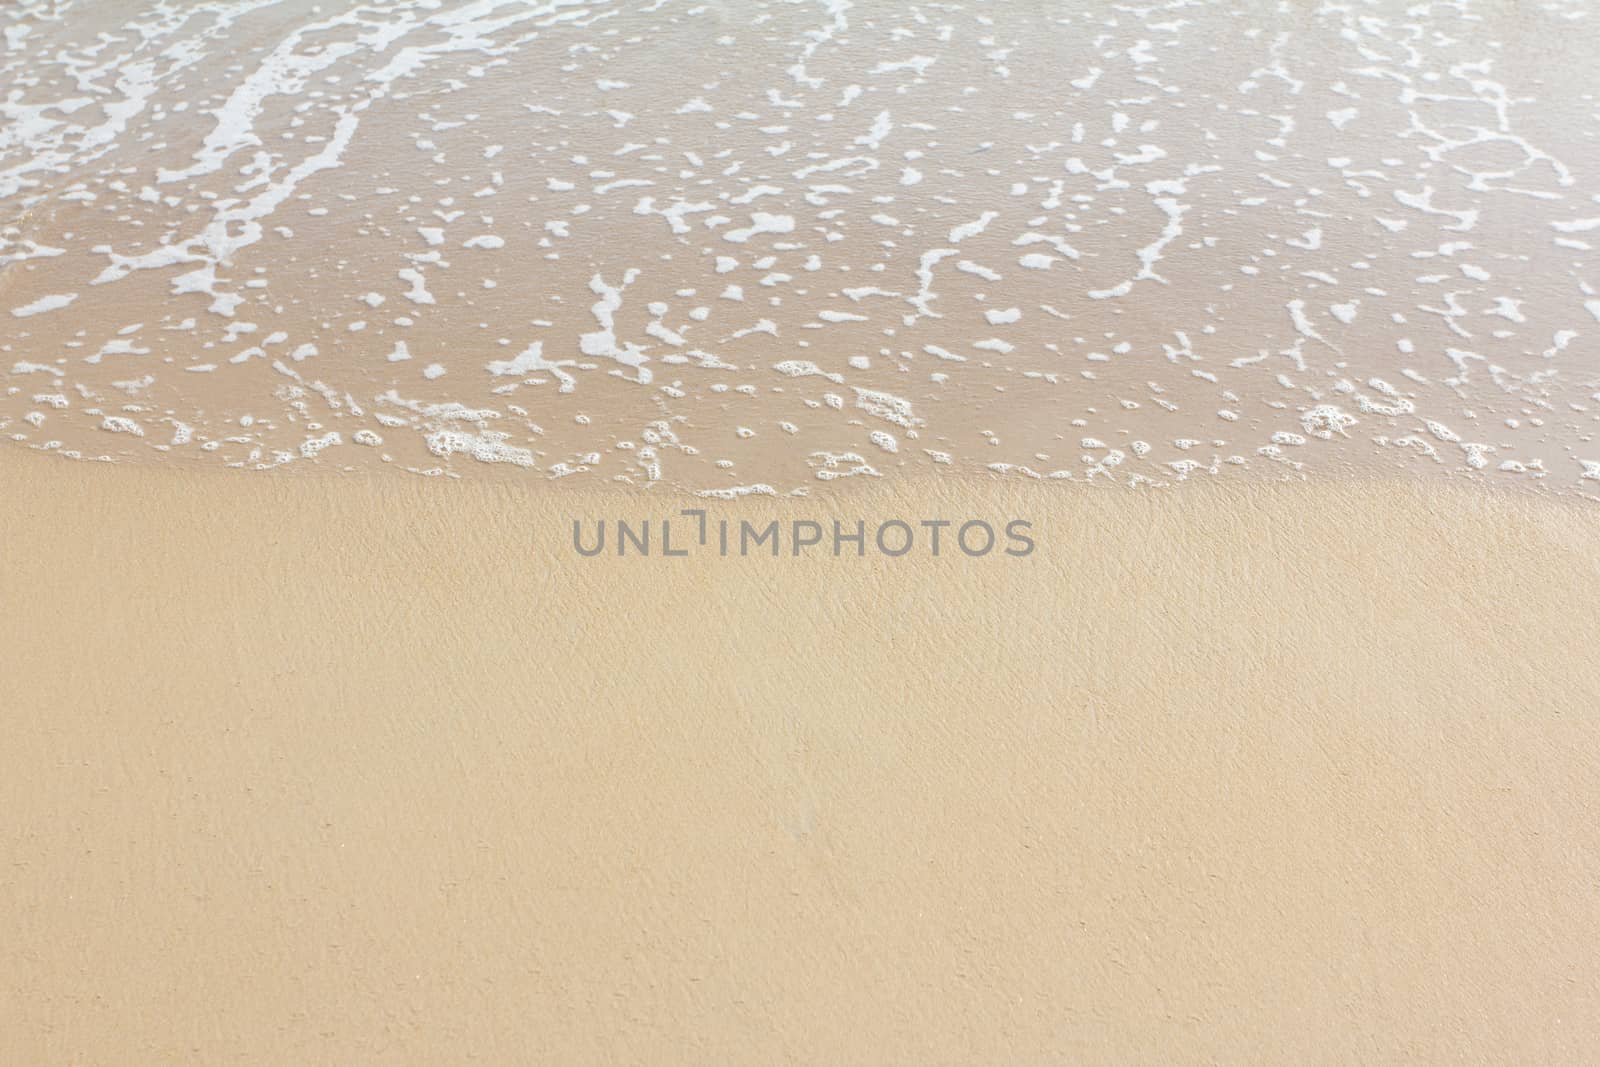 Wet sand on beach by wyoosumran